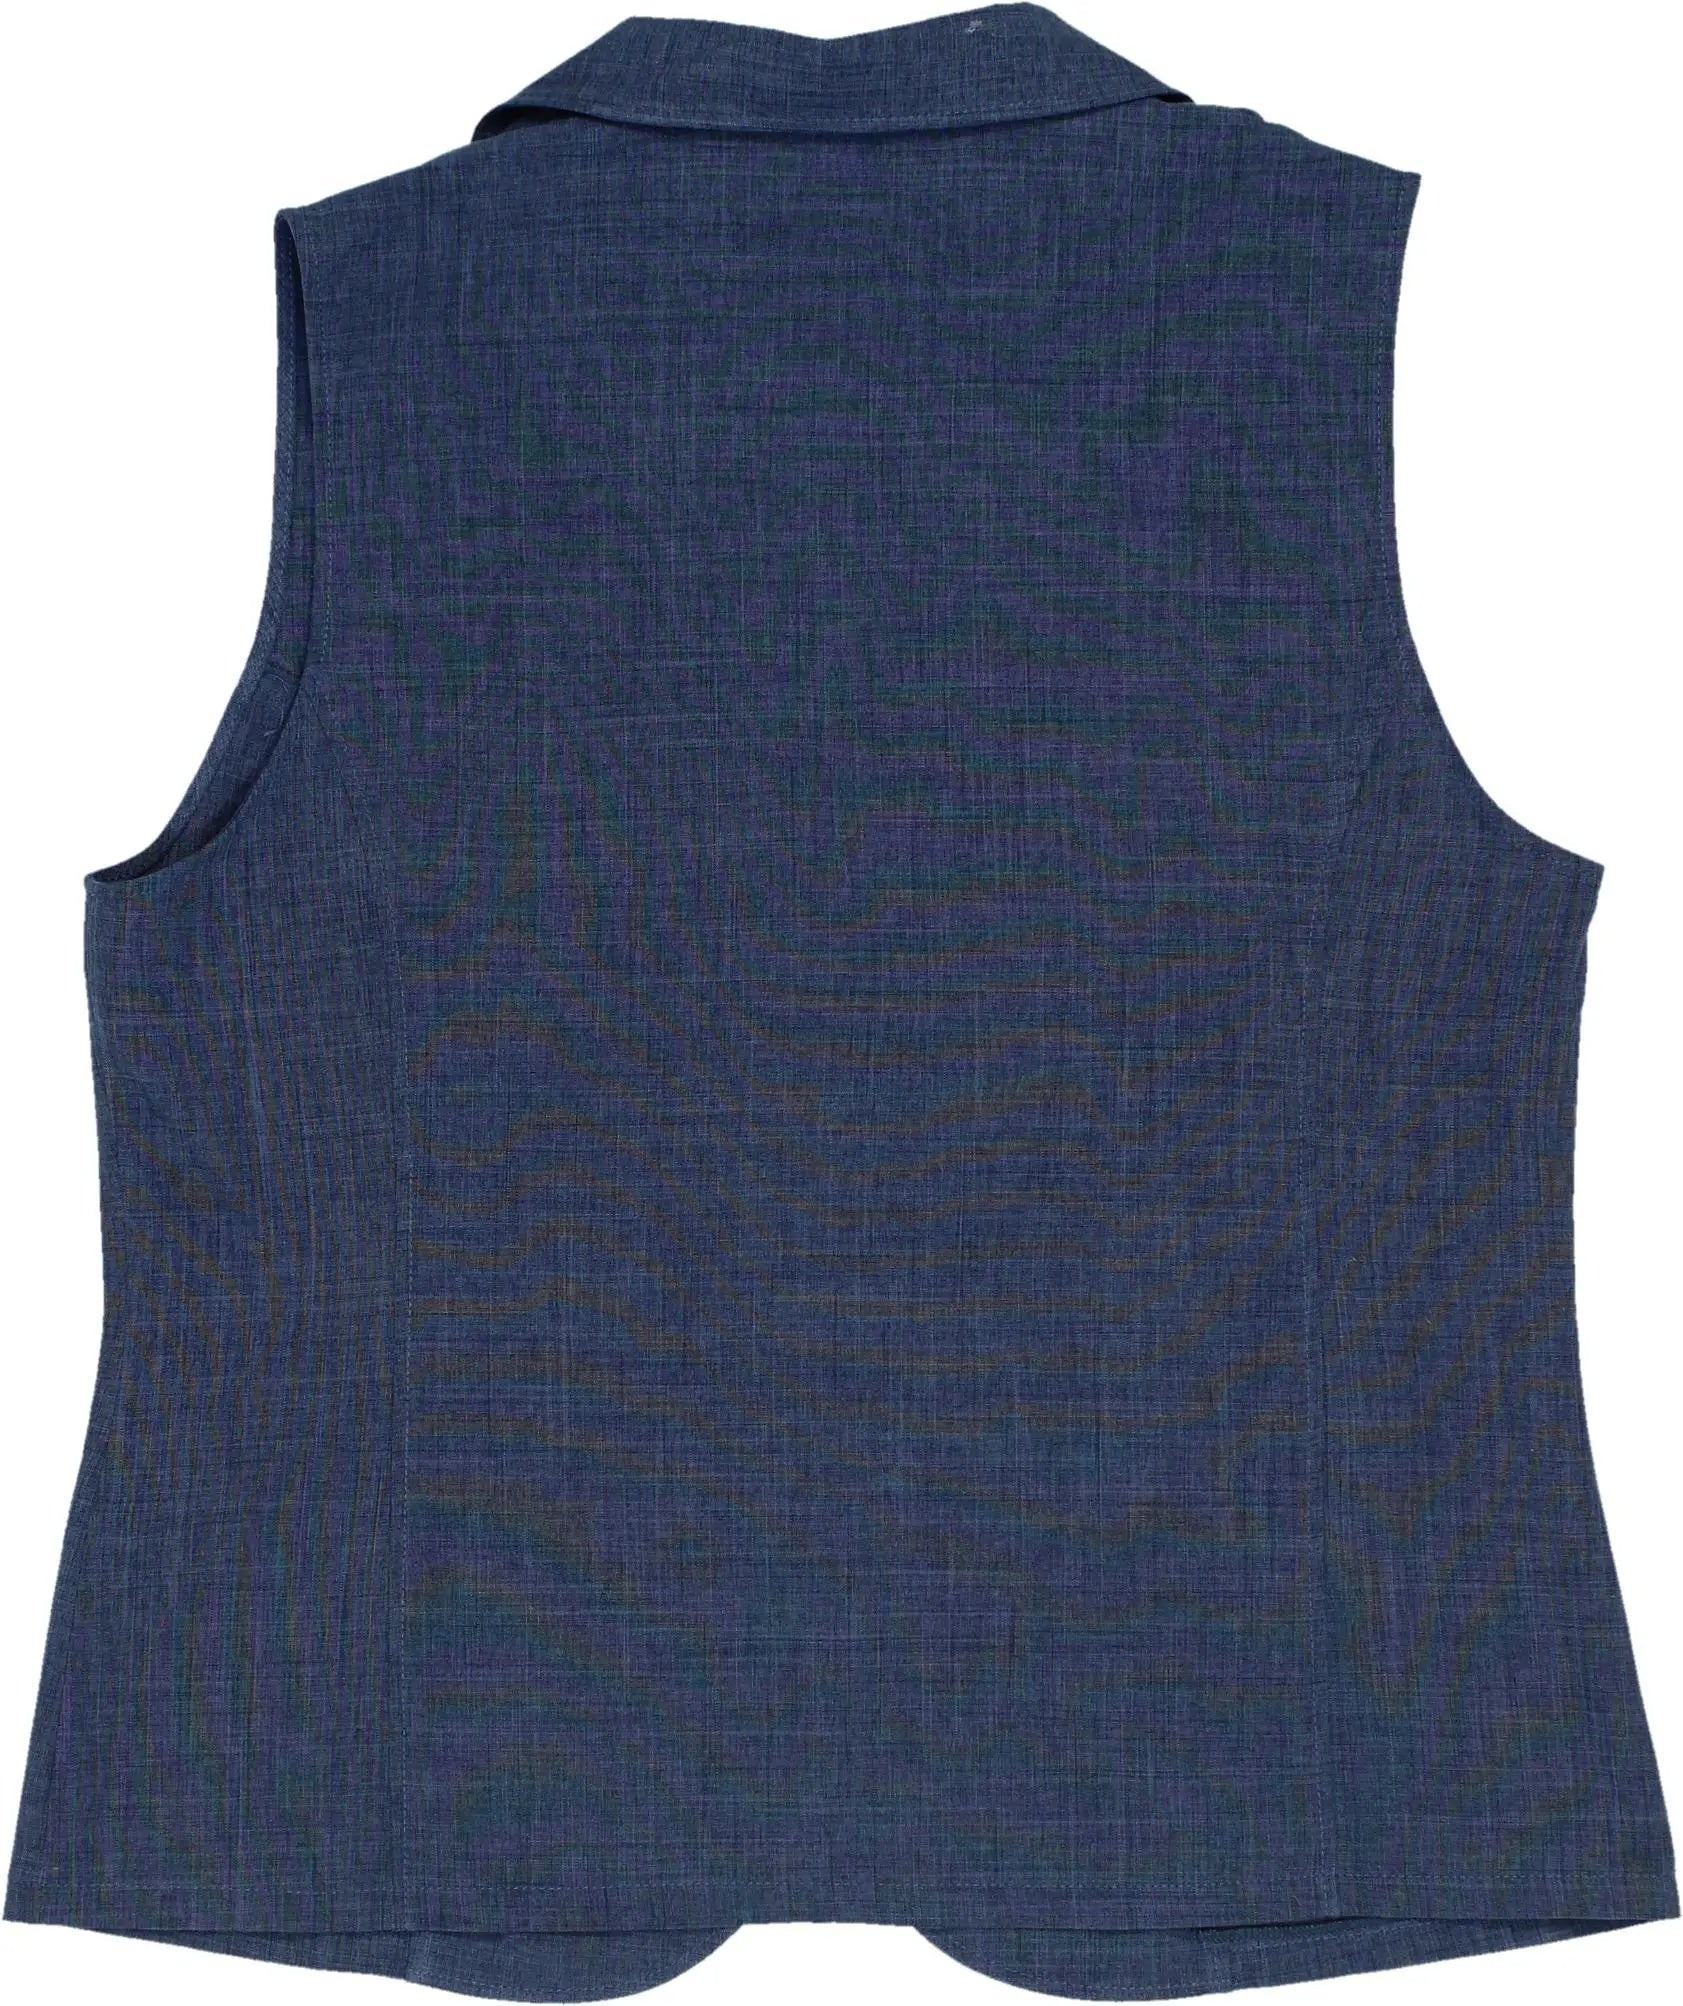 Setter - Blue Gilet- ThriftTale.com - Vintage and second handclothing